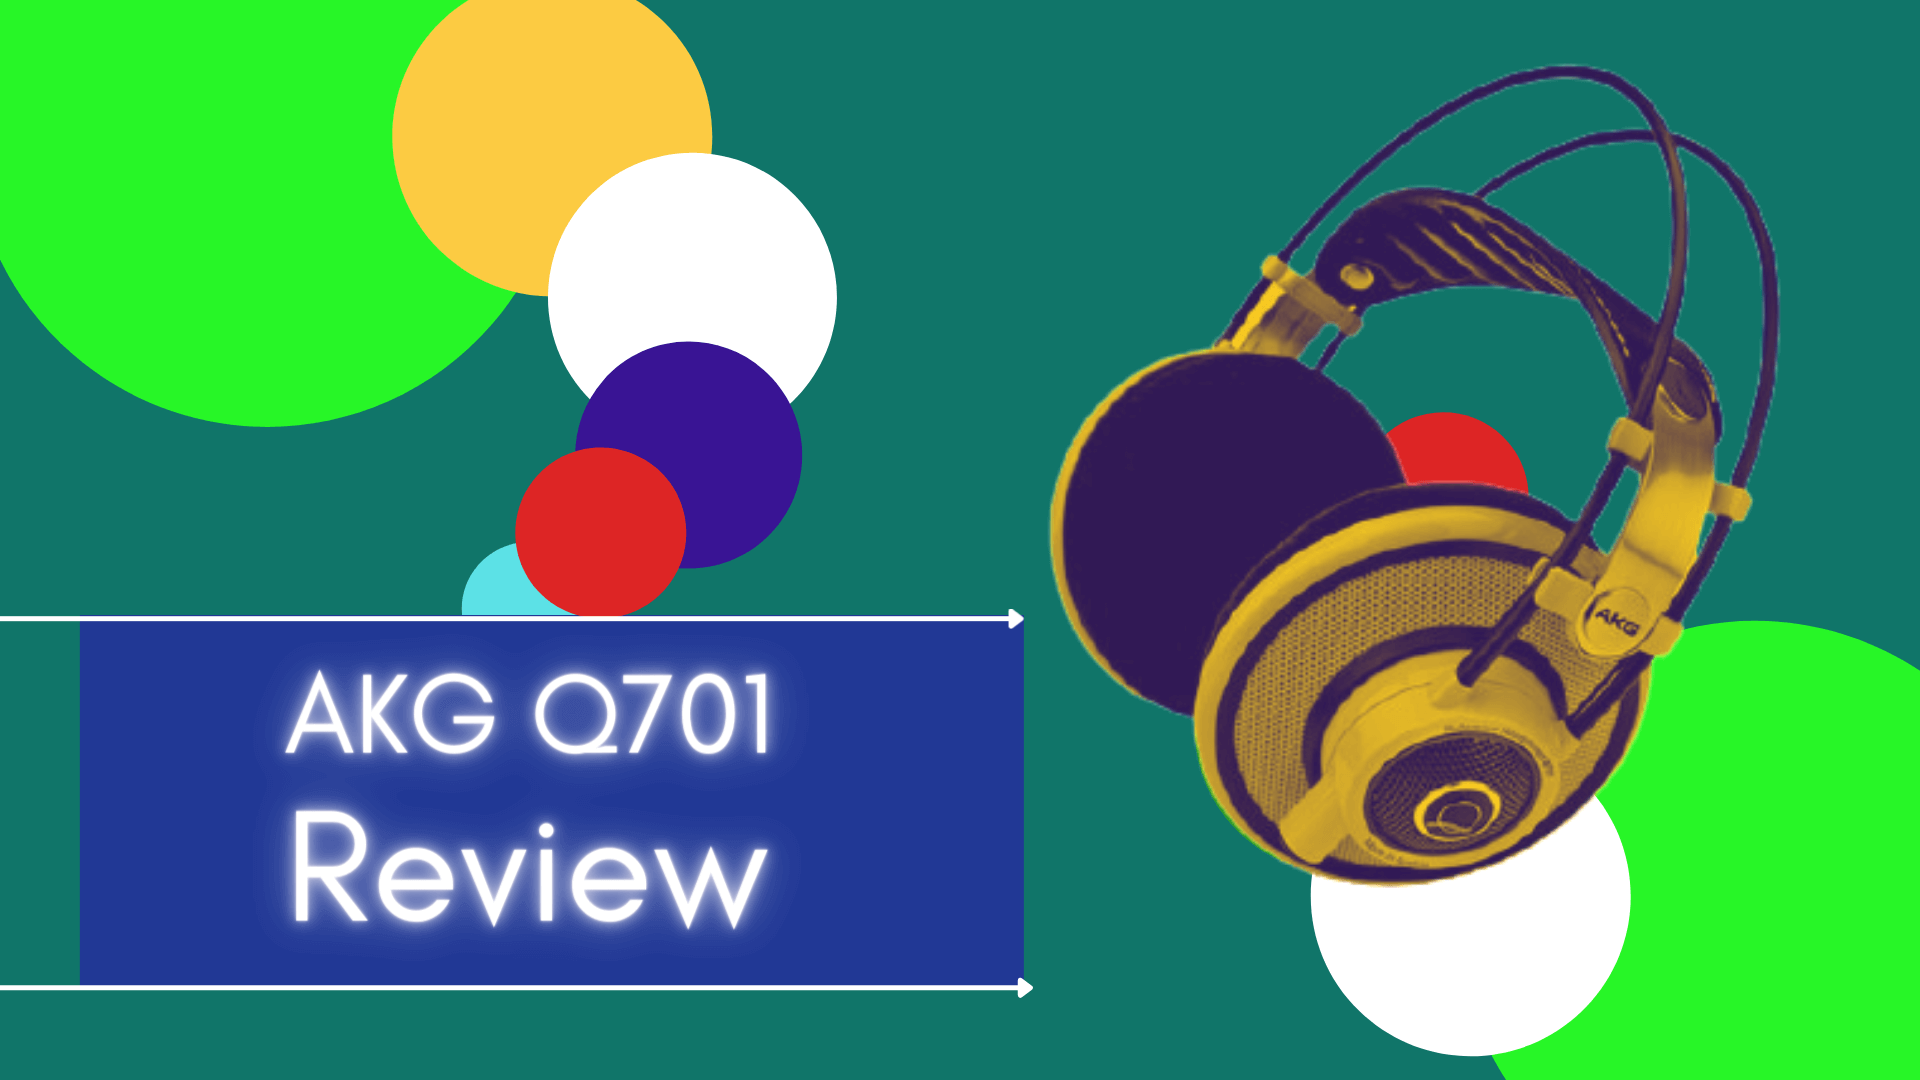 AKG Q701 Review